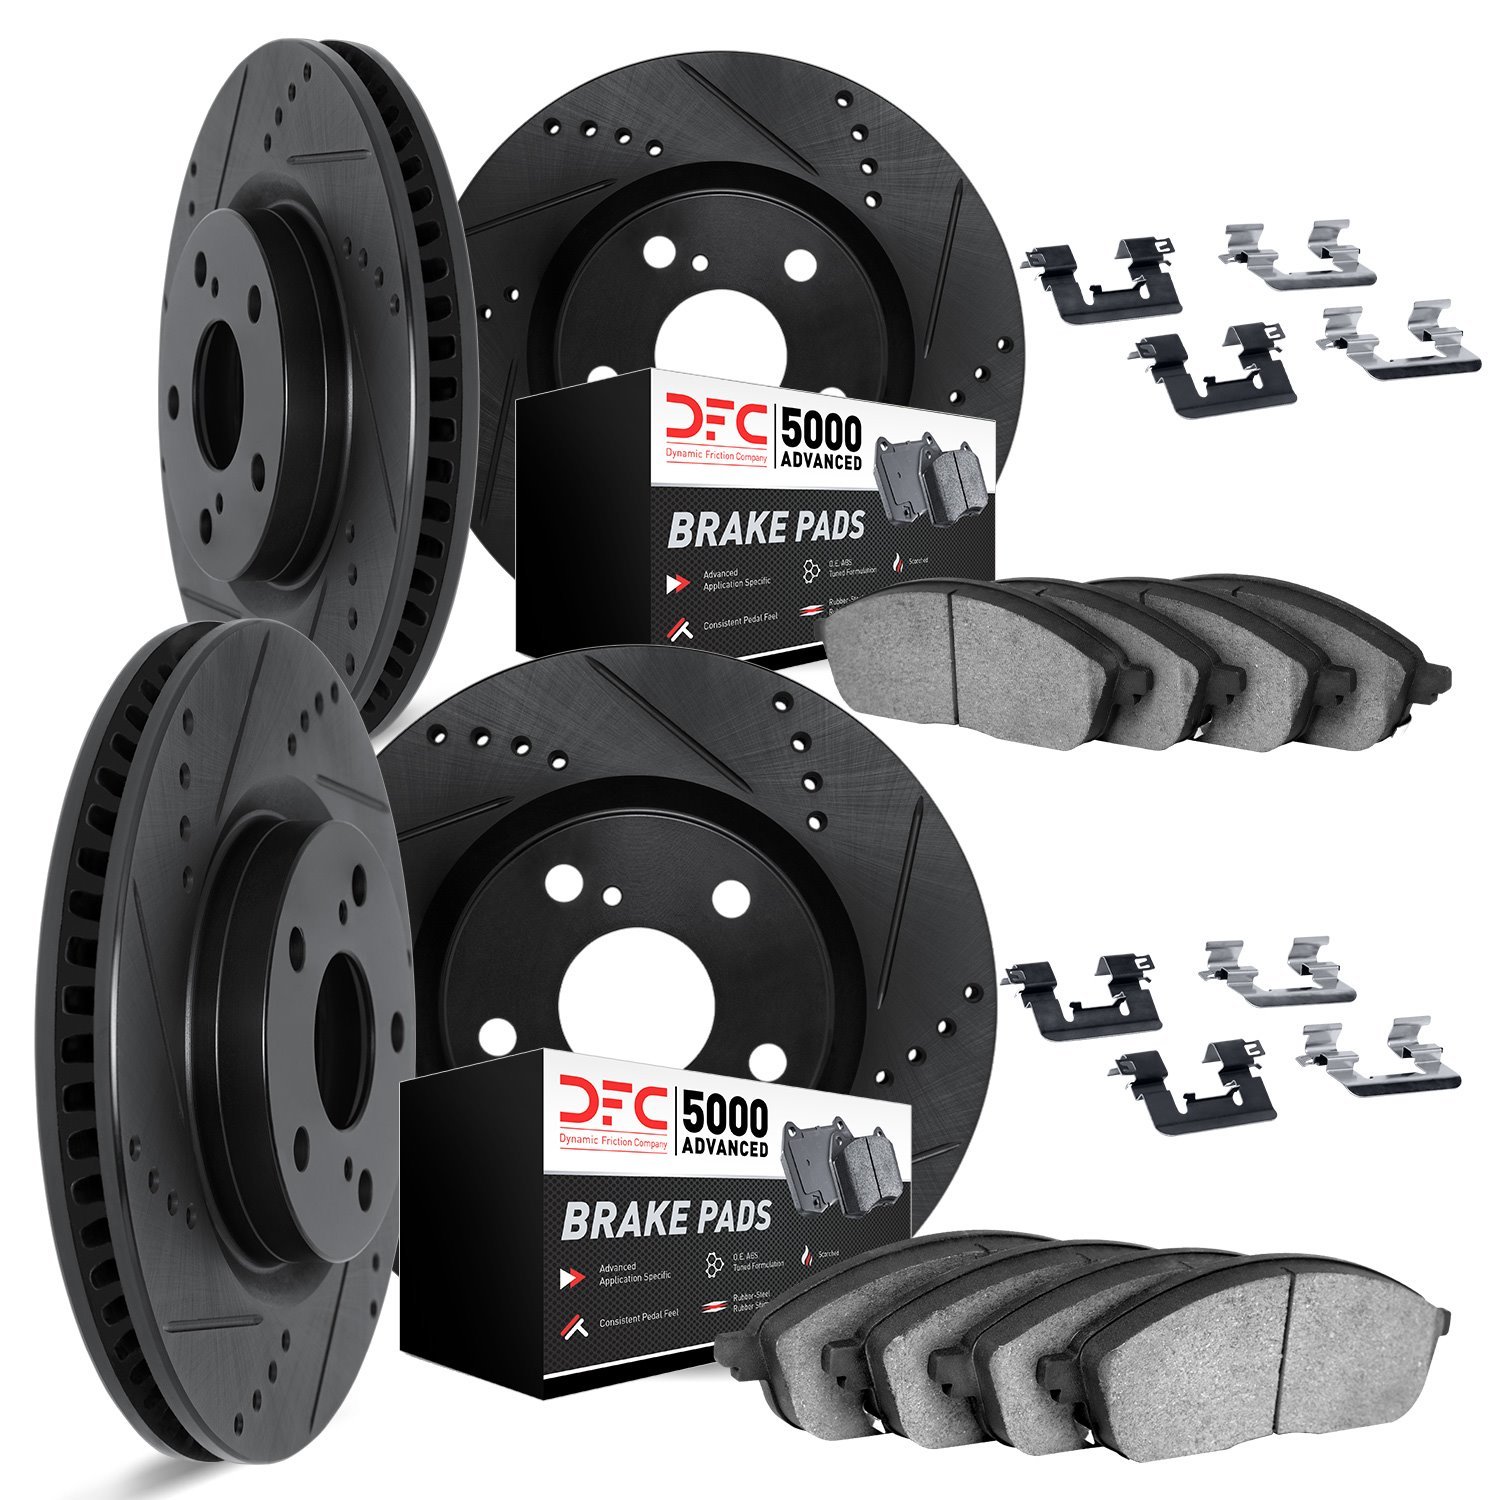 8514-13010 Drilled/Slotted Brake Rotors w/5000 Advanced Brake Pads Kit & Hardware [Black], 2013-2020 Multiple Makes/Models, Posi